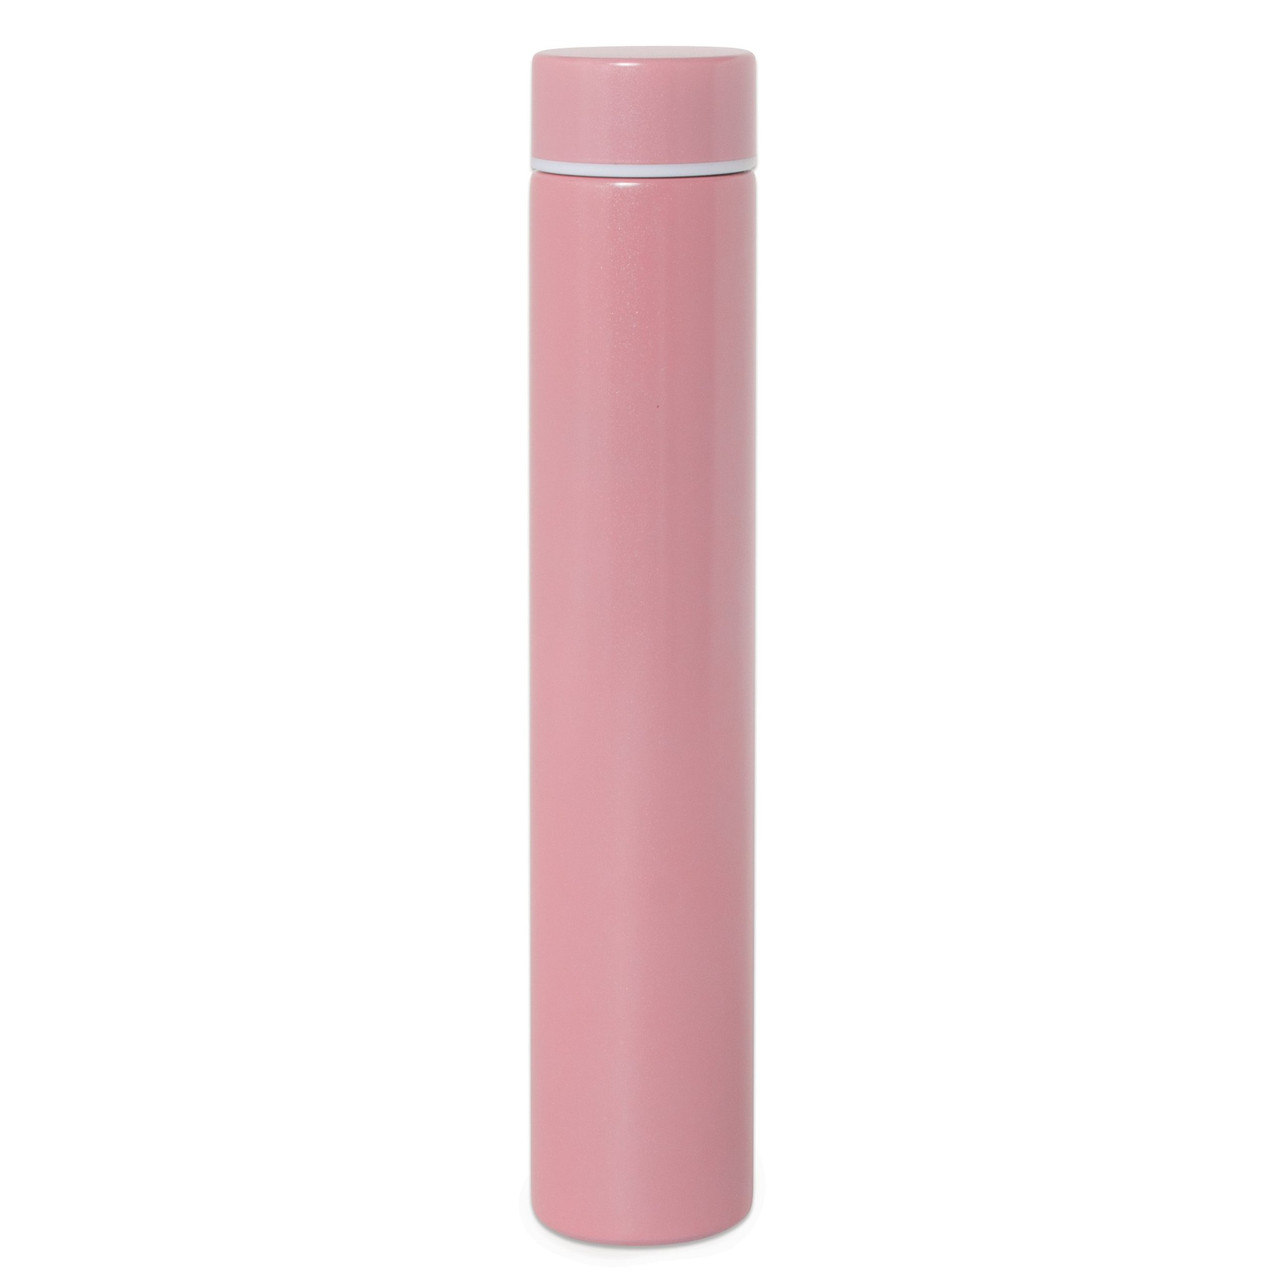 Slim Flask Bottle - Pink Confetti